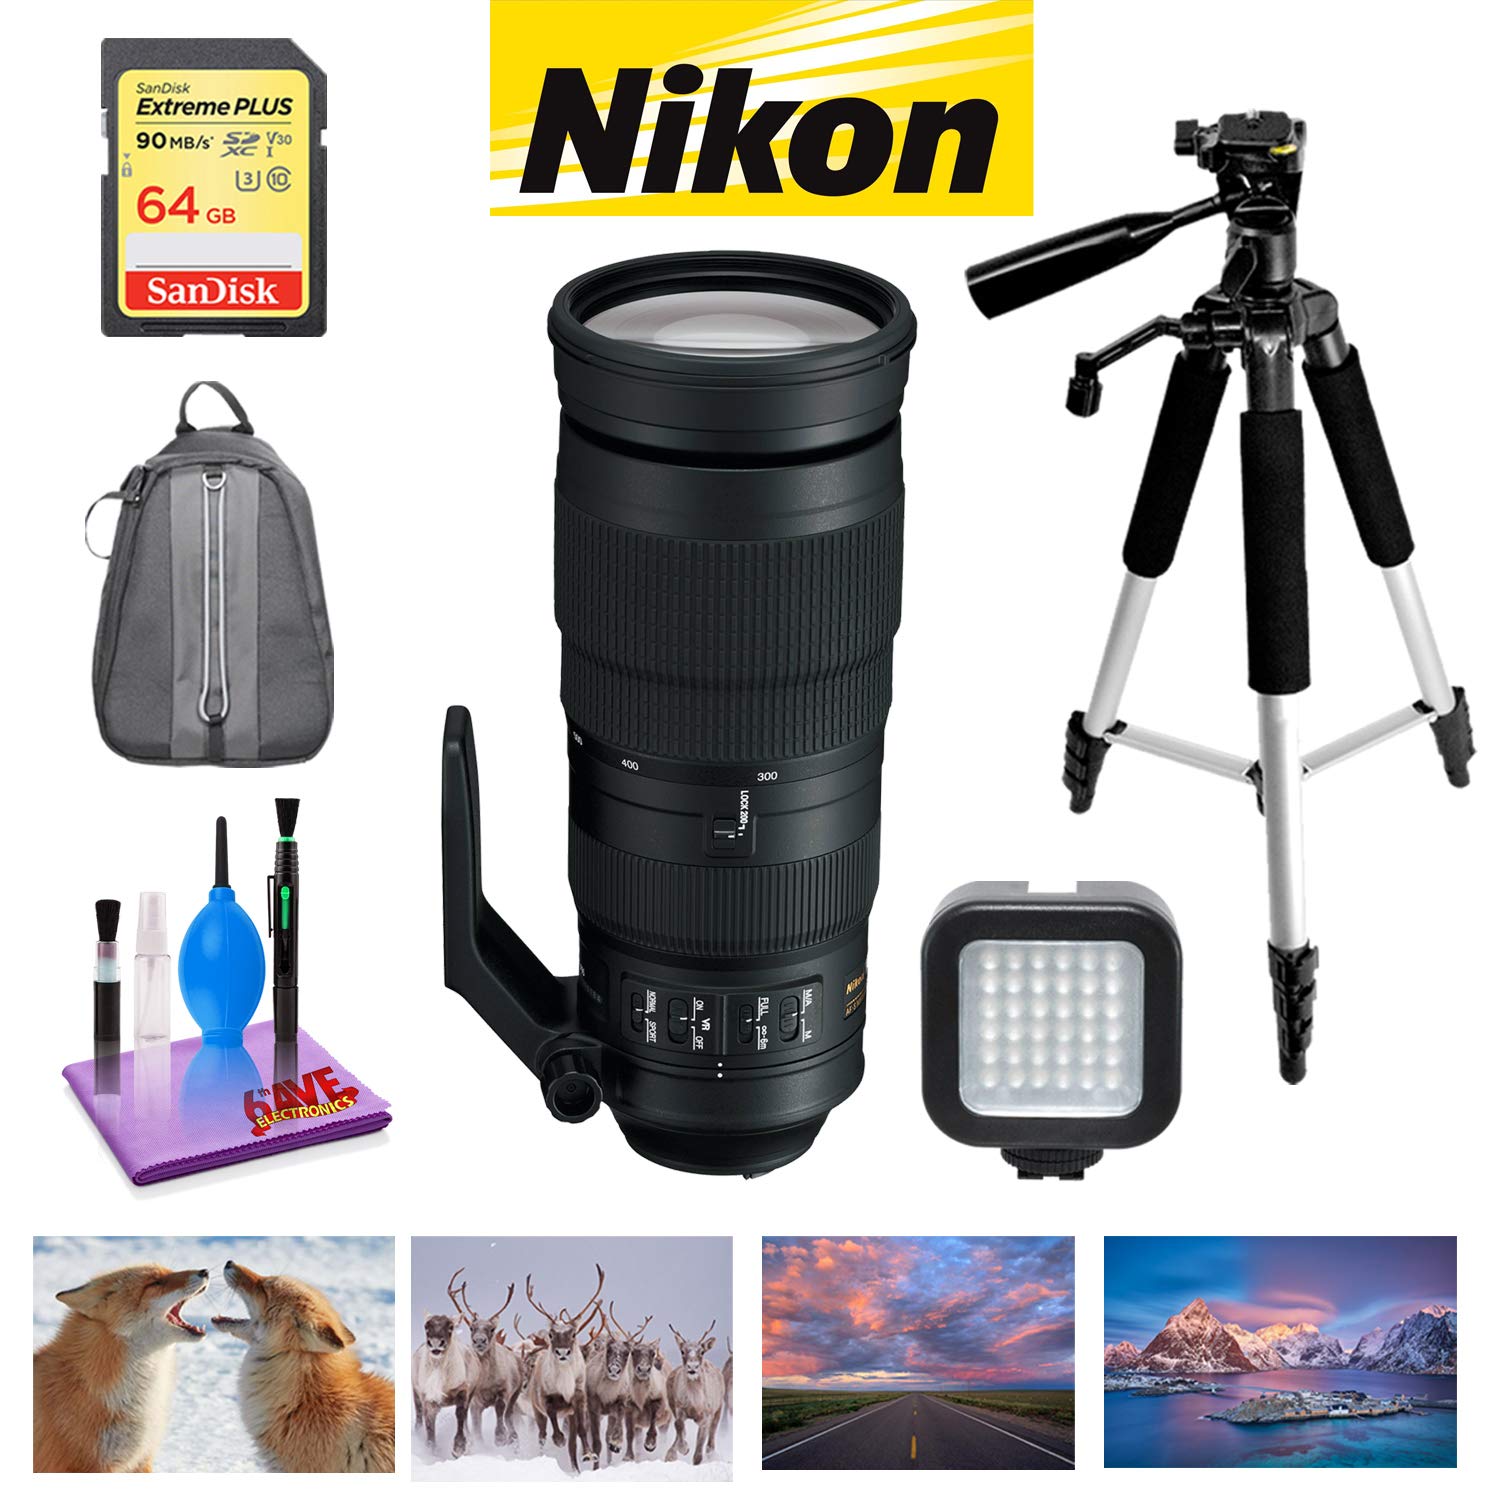 Nikon AF-S NIKKOR 200-500mm f/5.6E ED VR Lens with Sandisk 64GB Memory, Portable LED Light, and Deluxe Padded Backpack